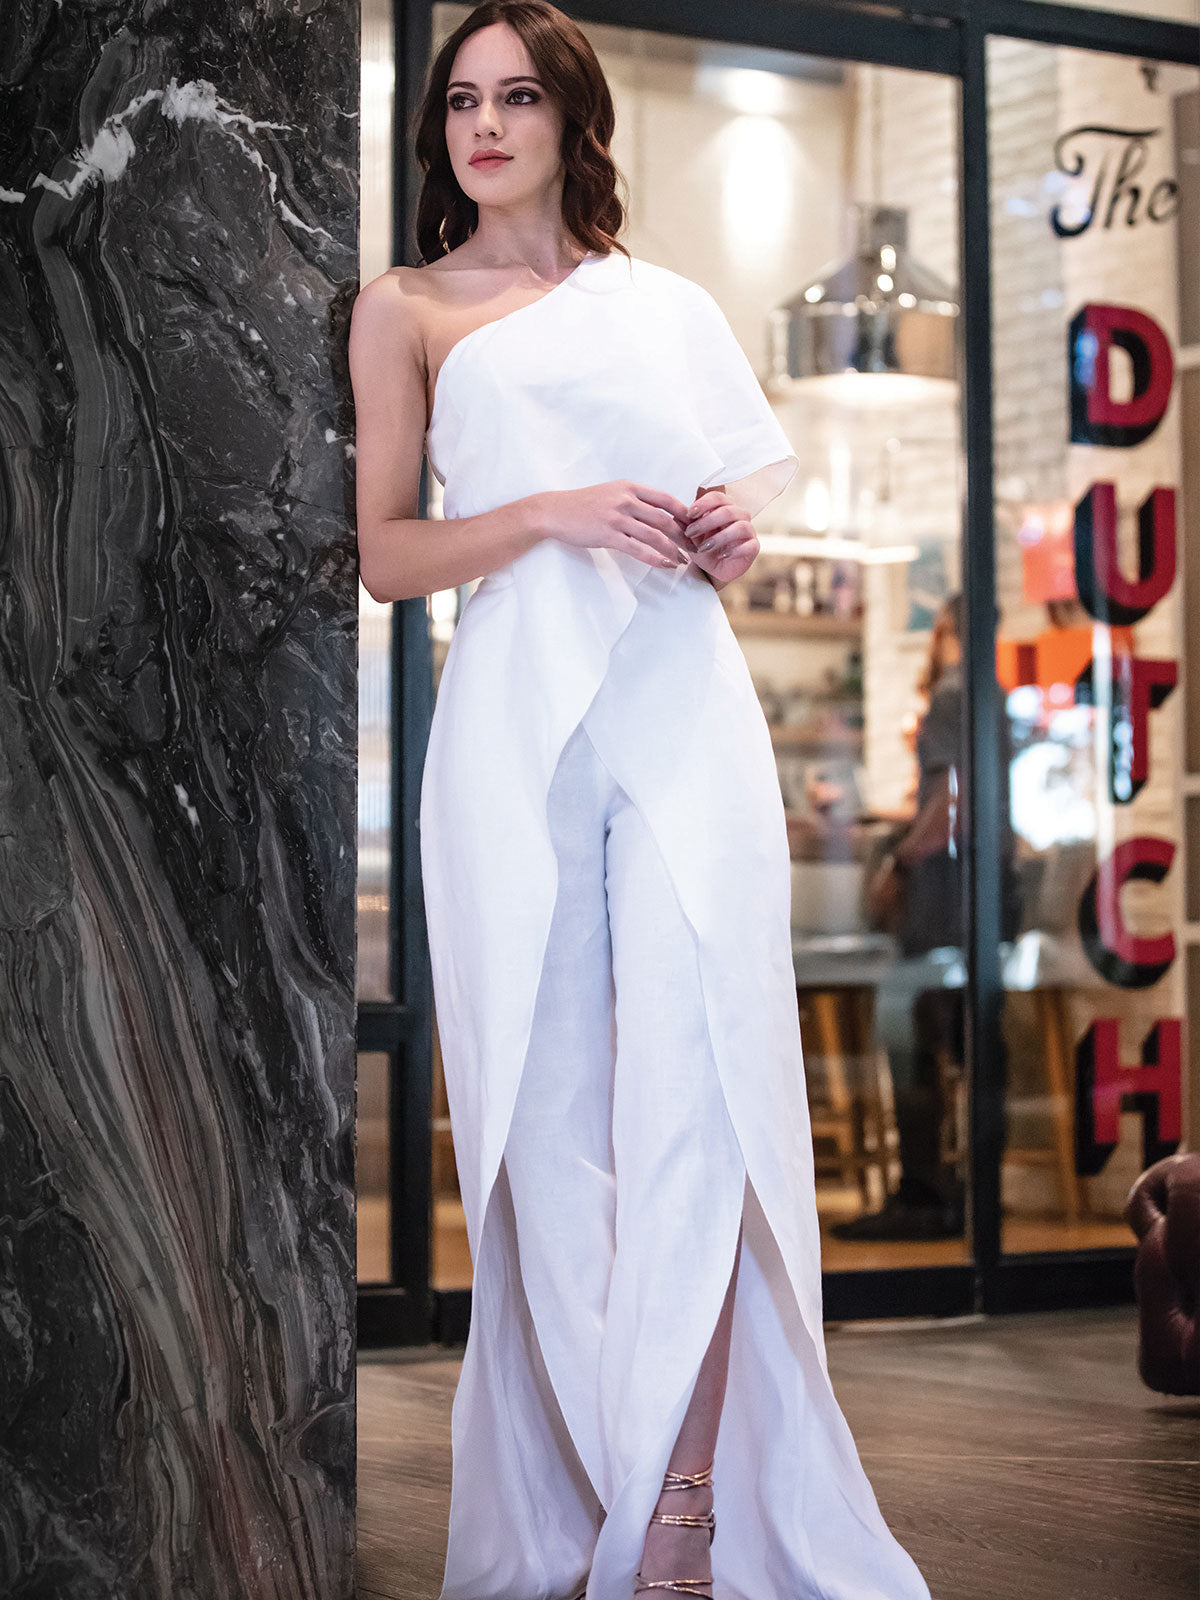 Jumpsuit Tuta Allegra 100% Capri white linen jumpsuit worn by model